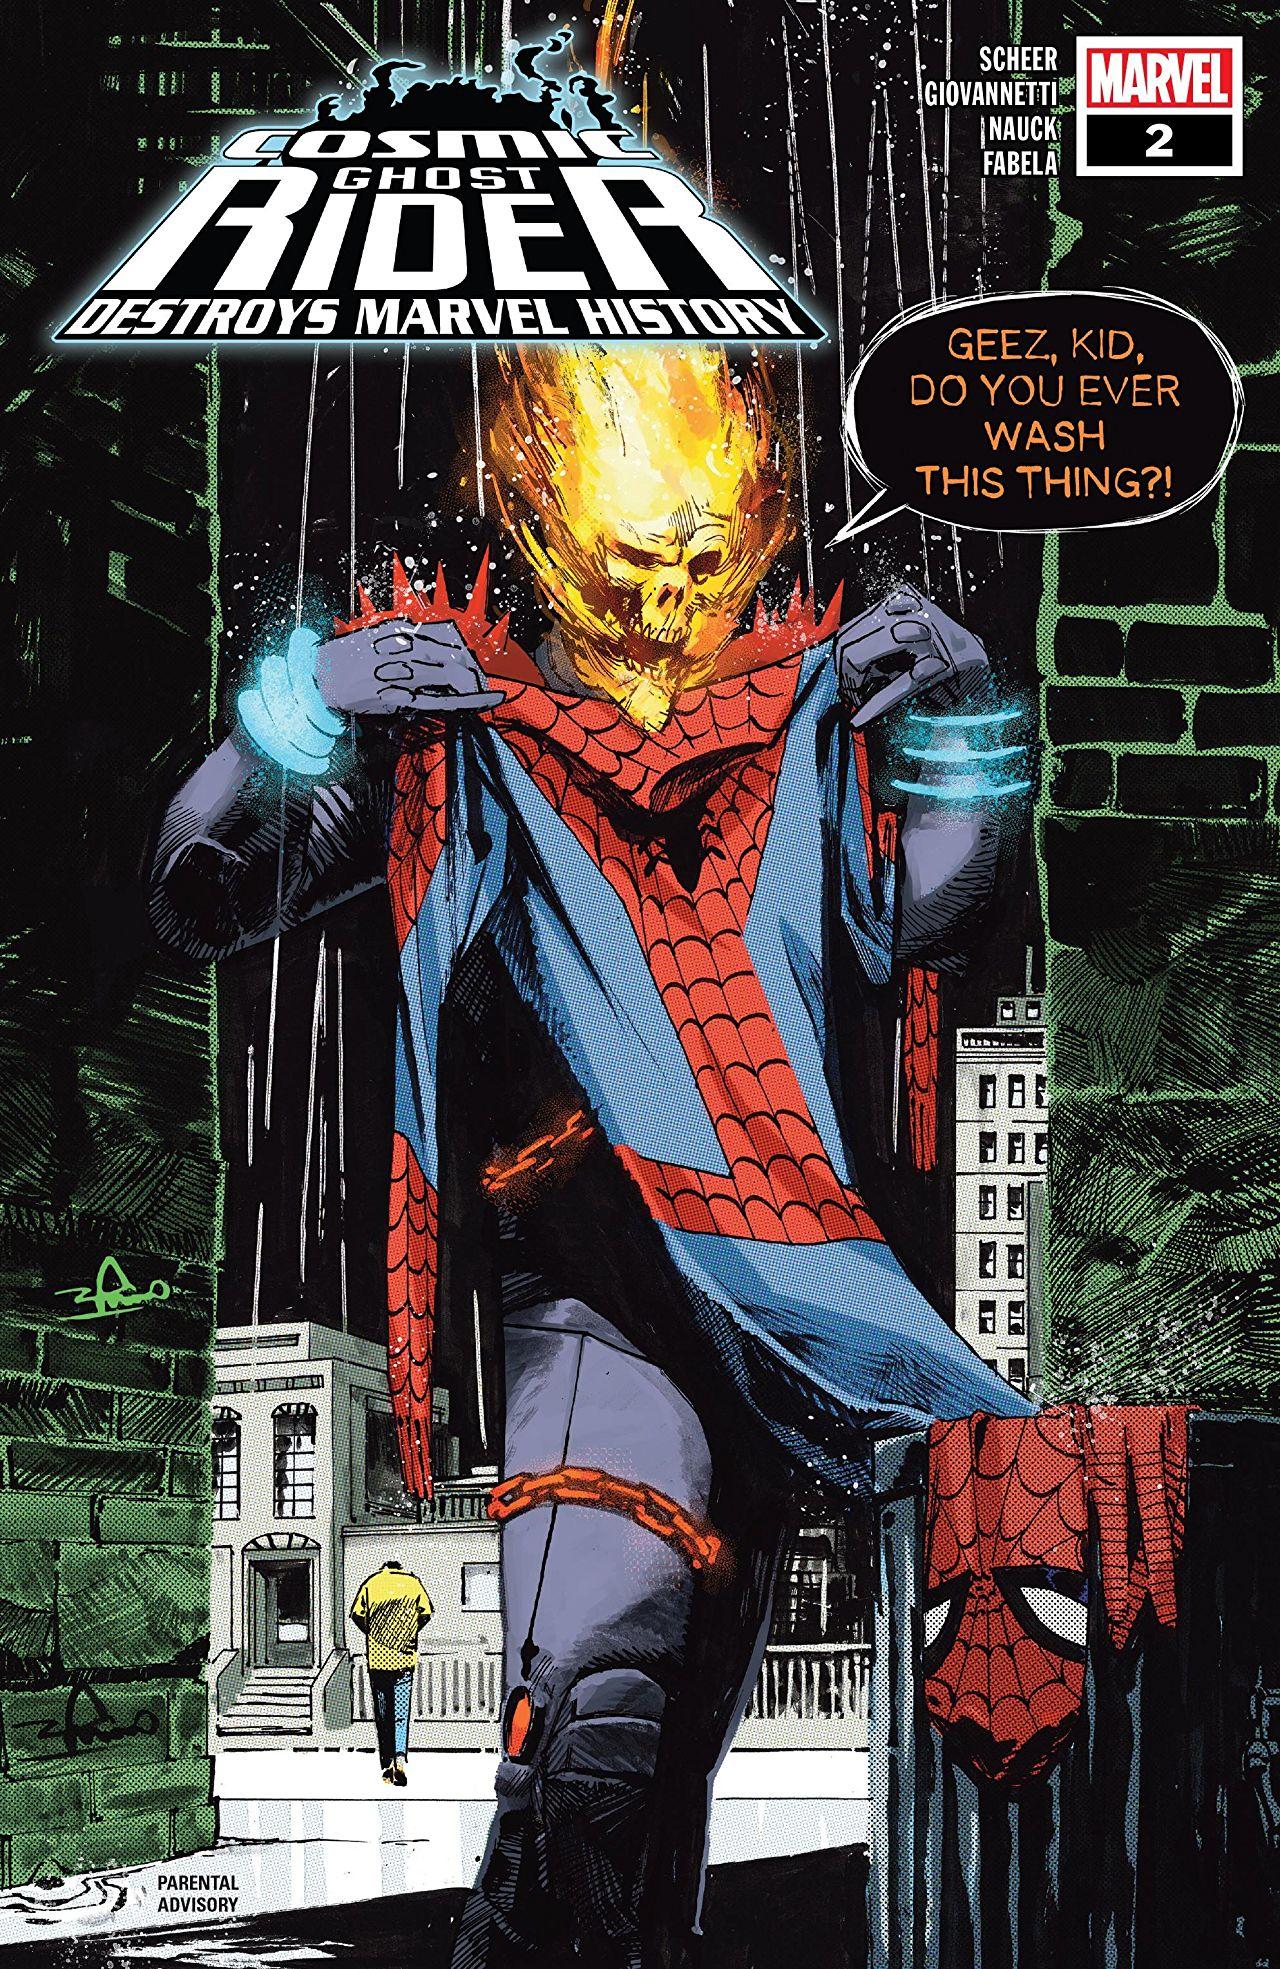 Cosmic Ghost Rider Destroys Marvel History Vol. 1 #2